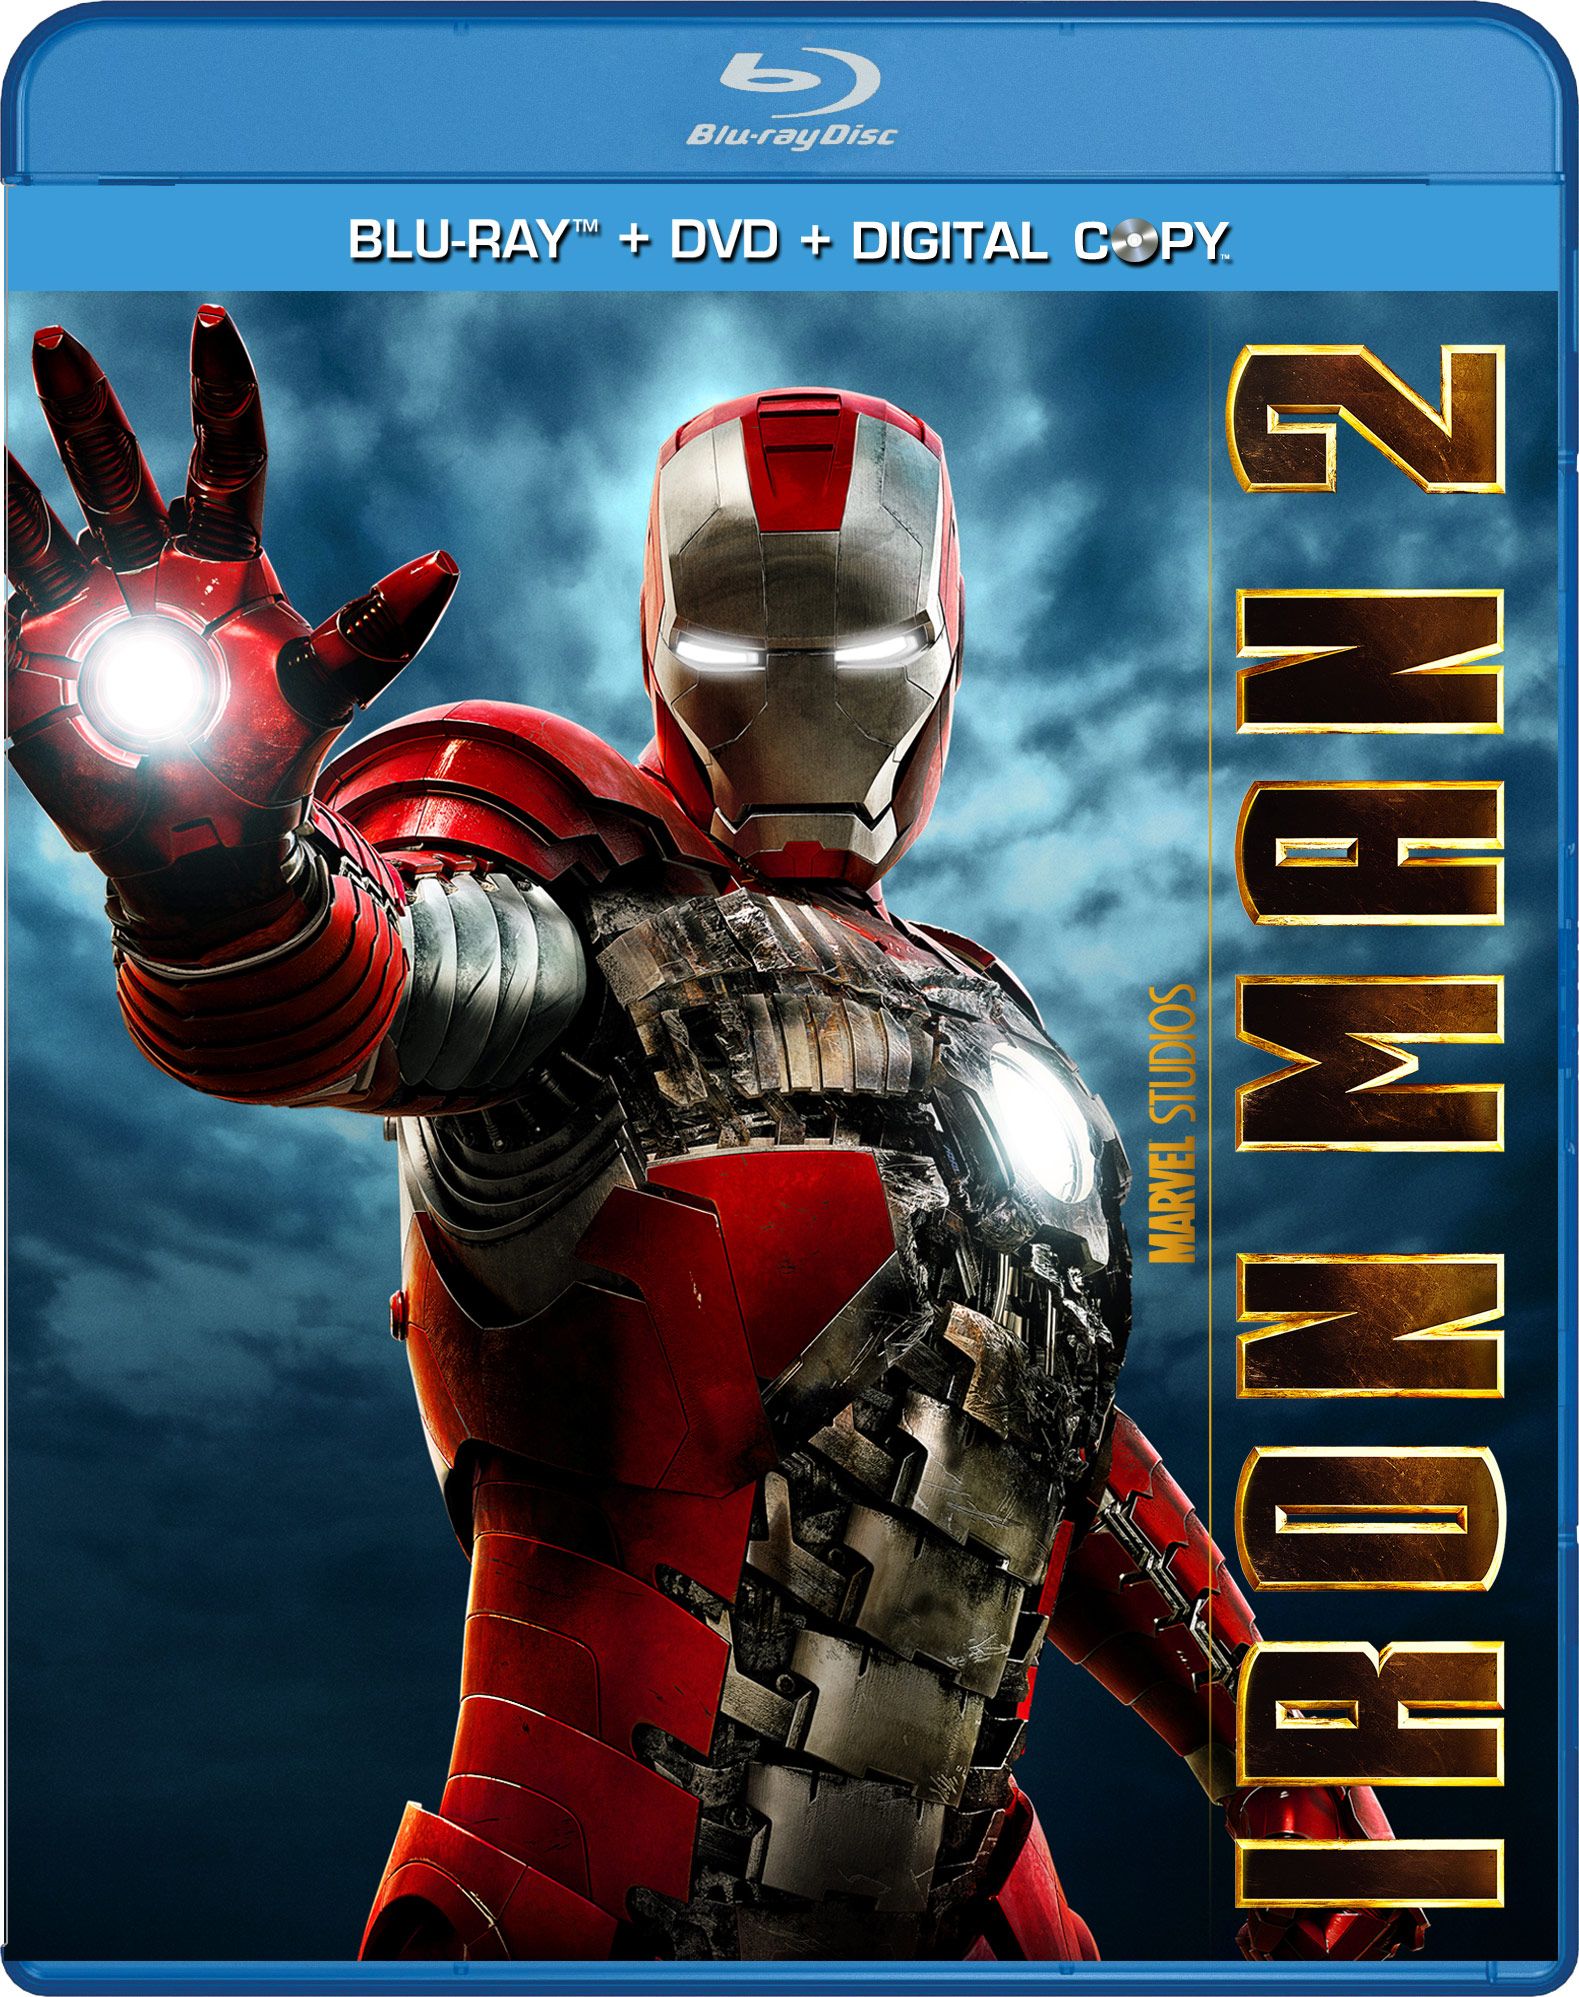 Iron Man 2 Blu-ray cover art